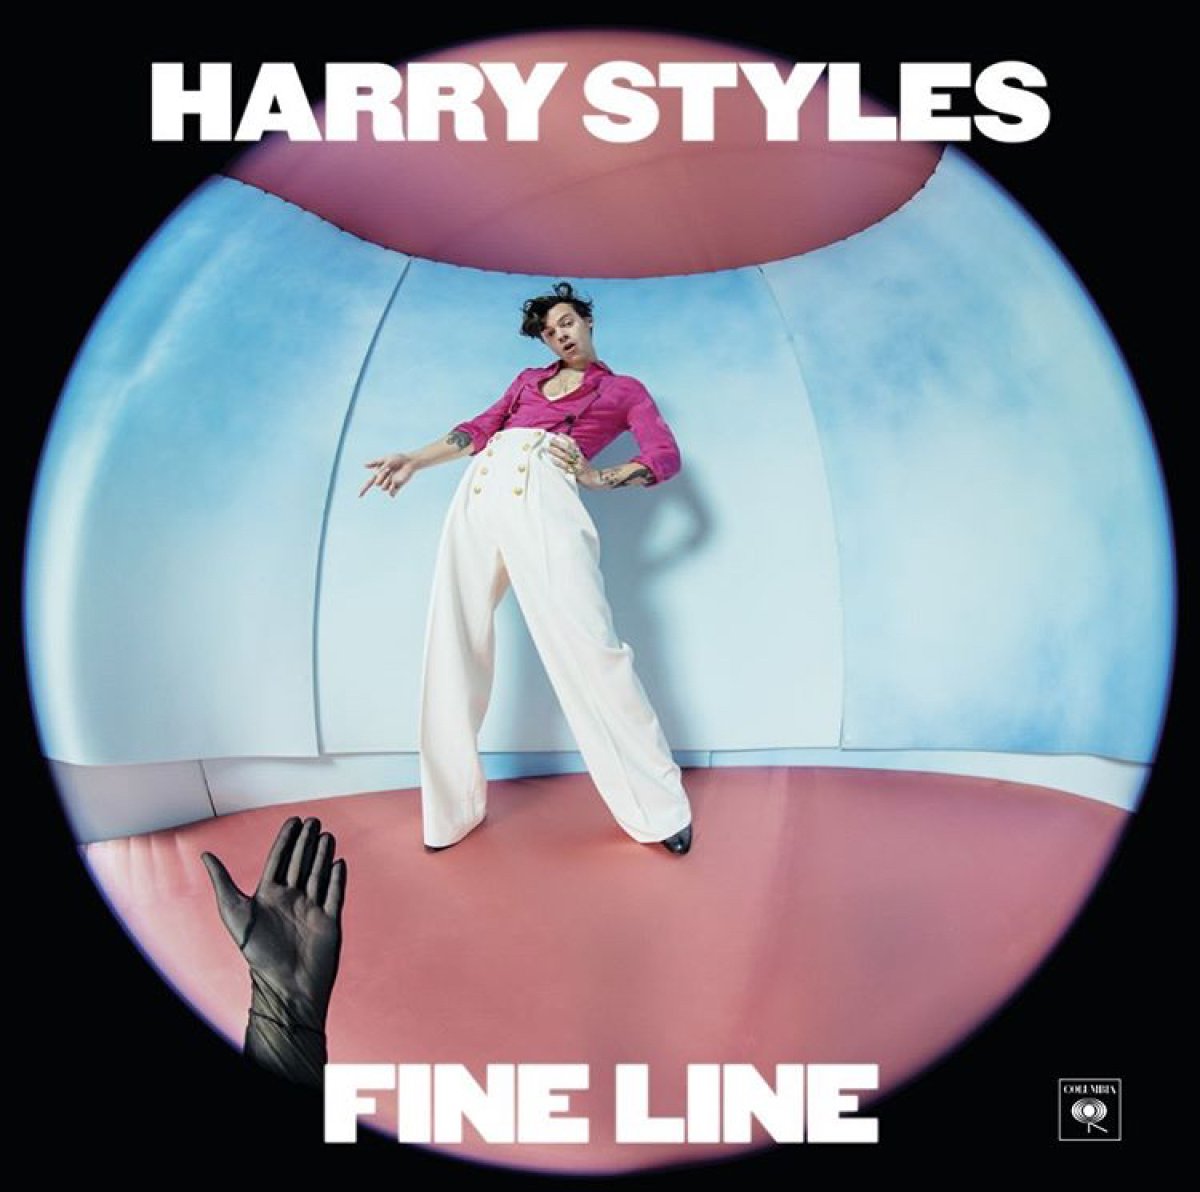 'Harry Styles' - Fine Line